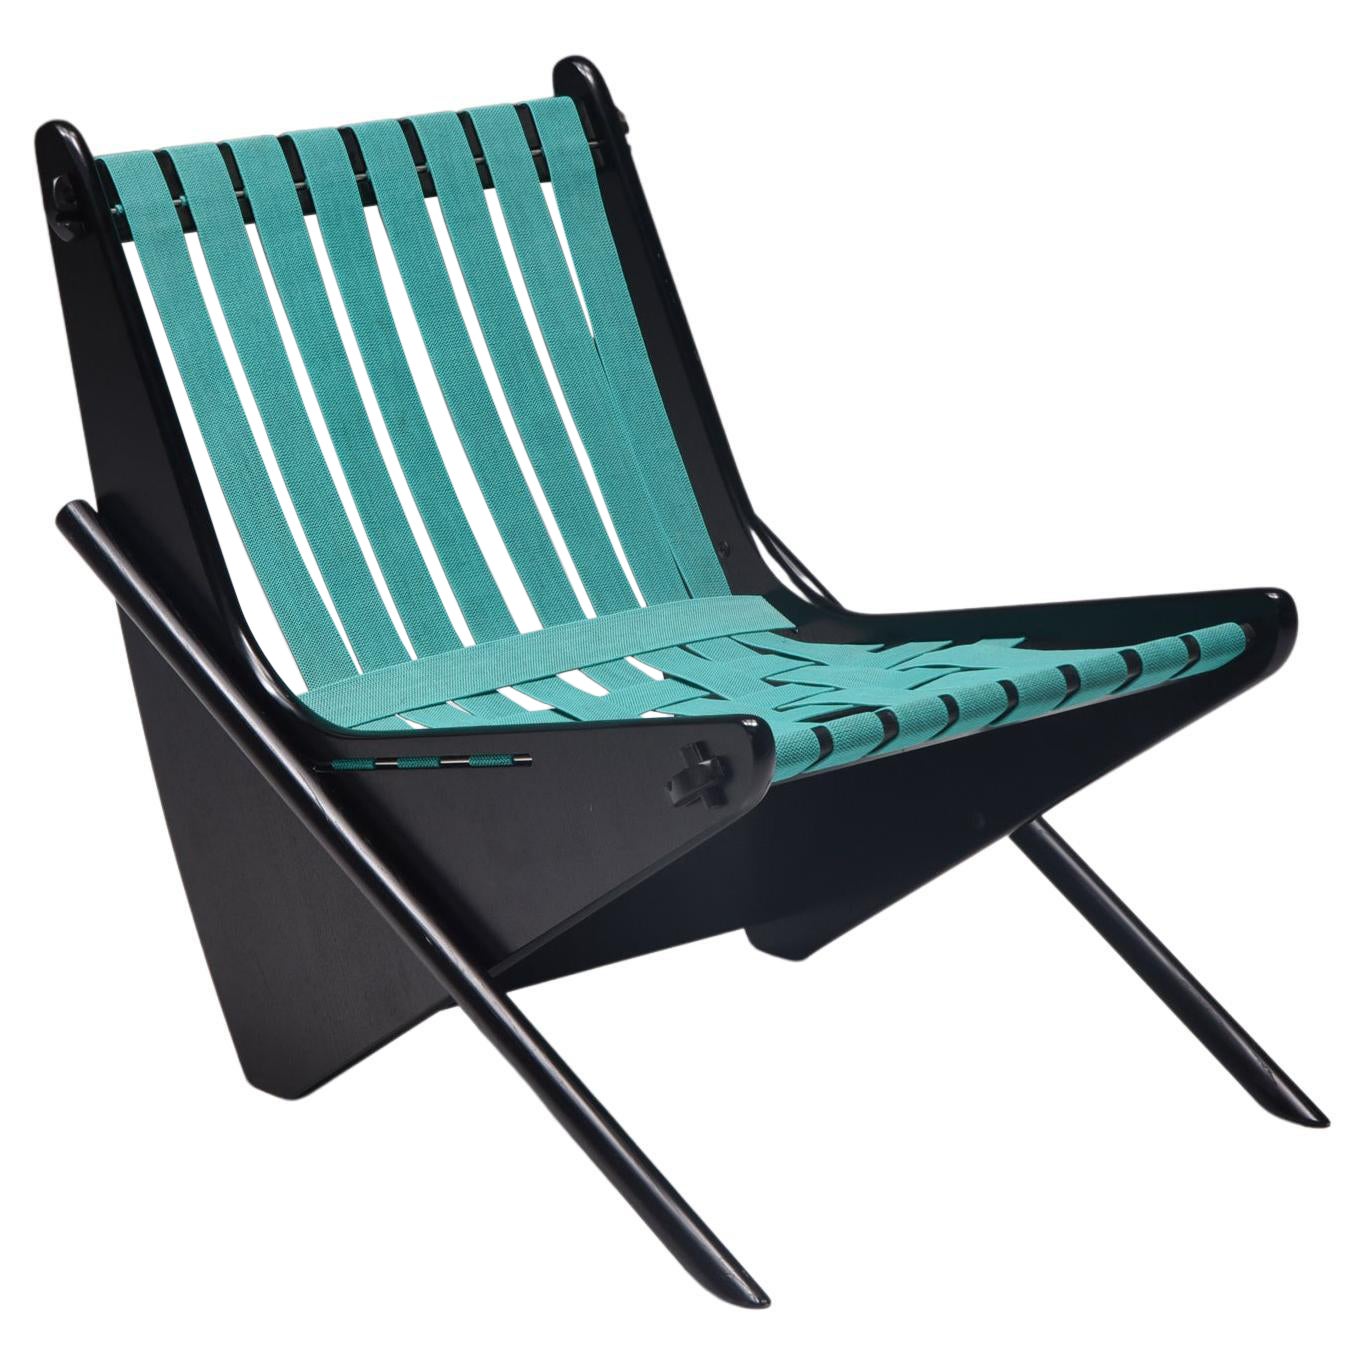 Brazilian Modern 'Boomerang' Lounge Chair by Richard Neutra, Limited Edition